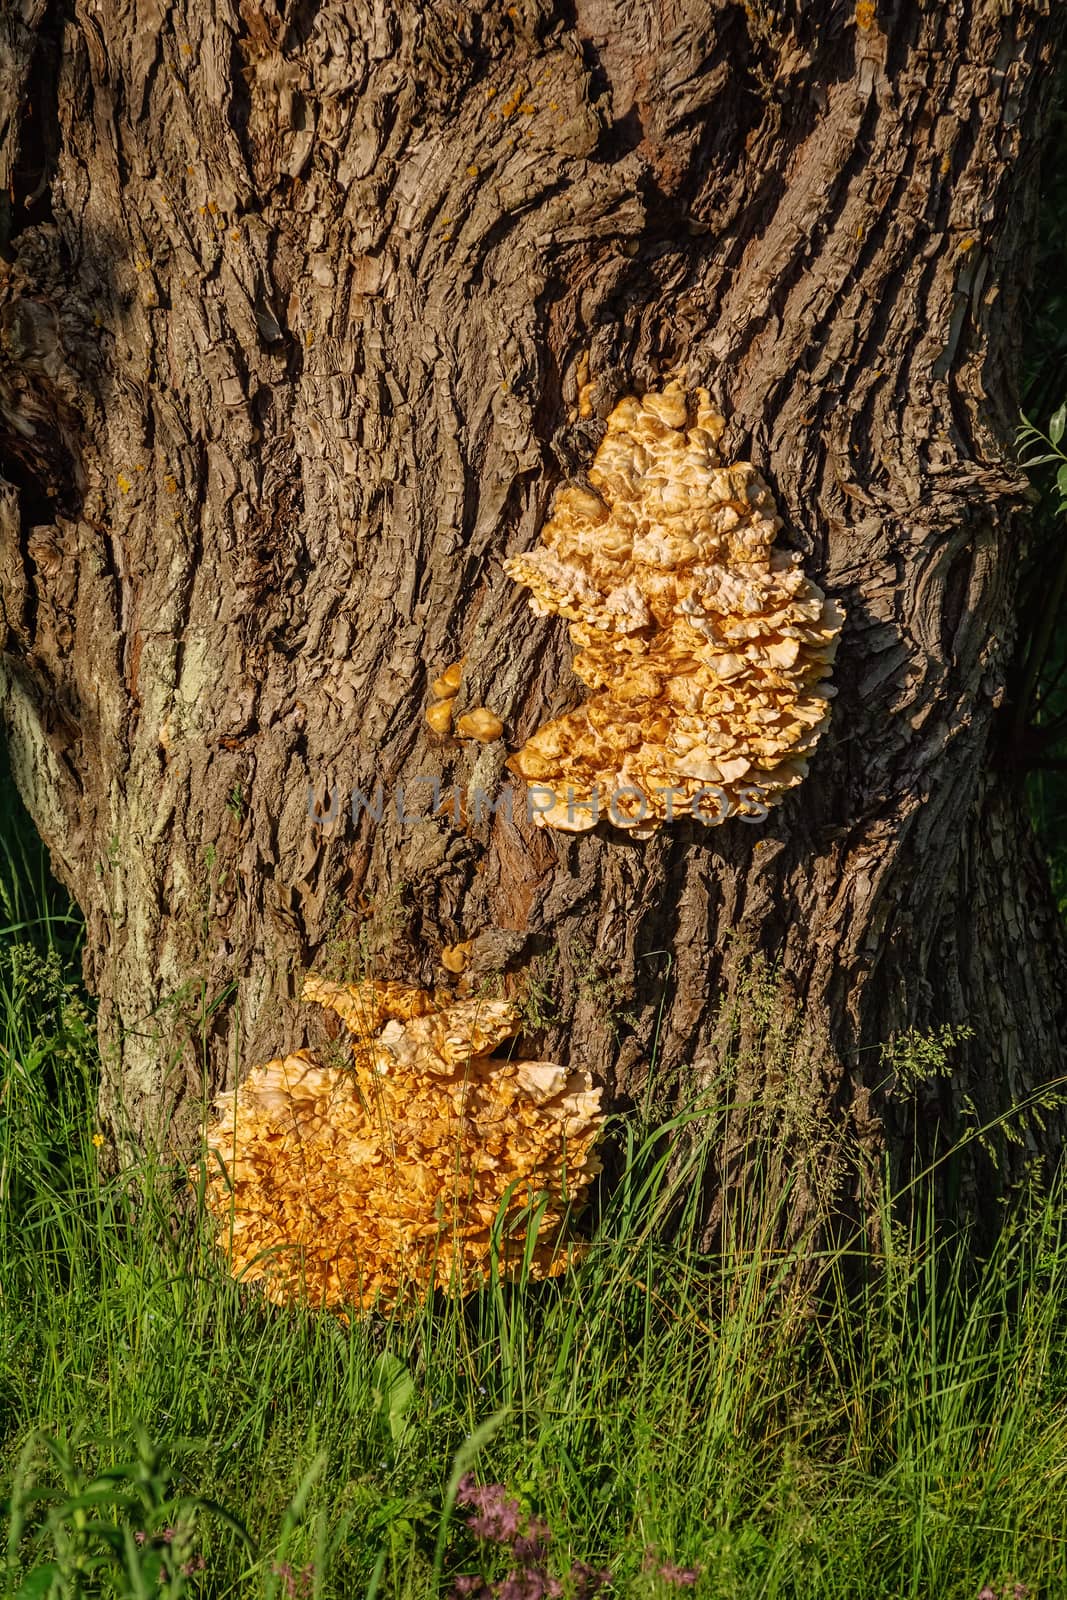 Sulphur shelf fungus on the oak tree